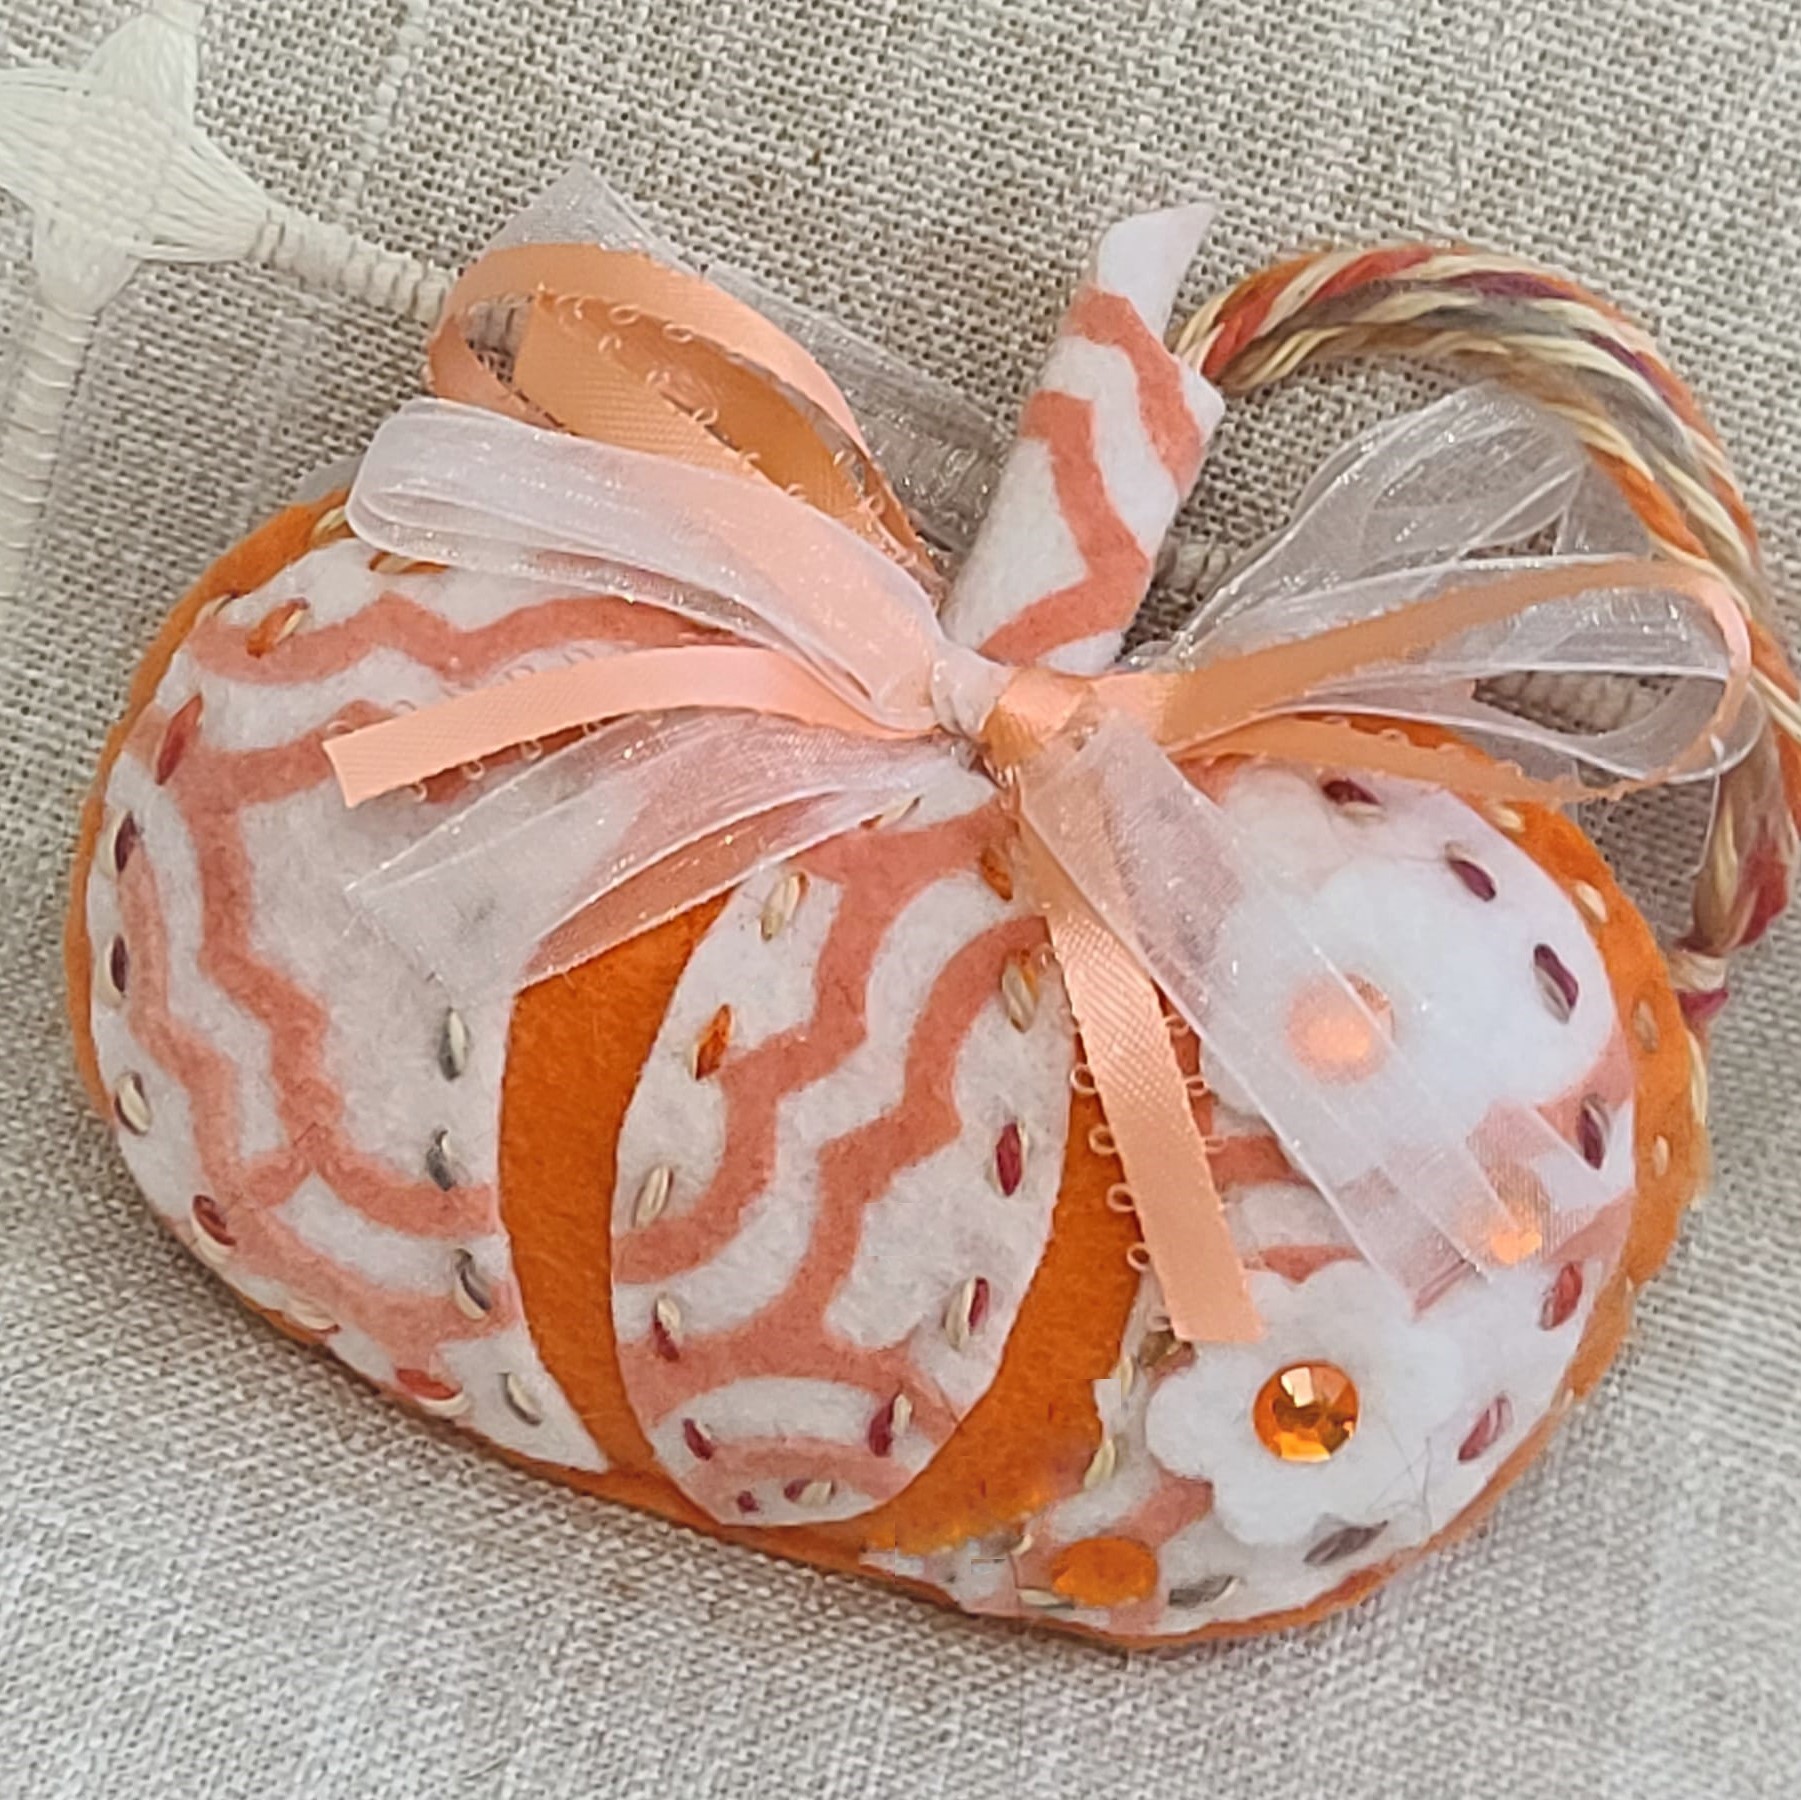 Felt pumpkin ornament - white and light orange country chic